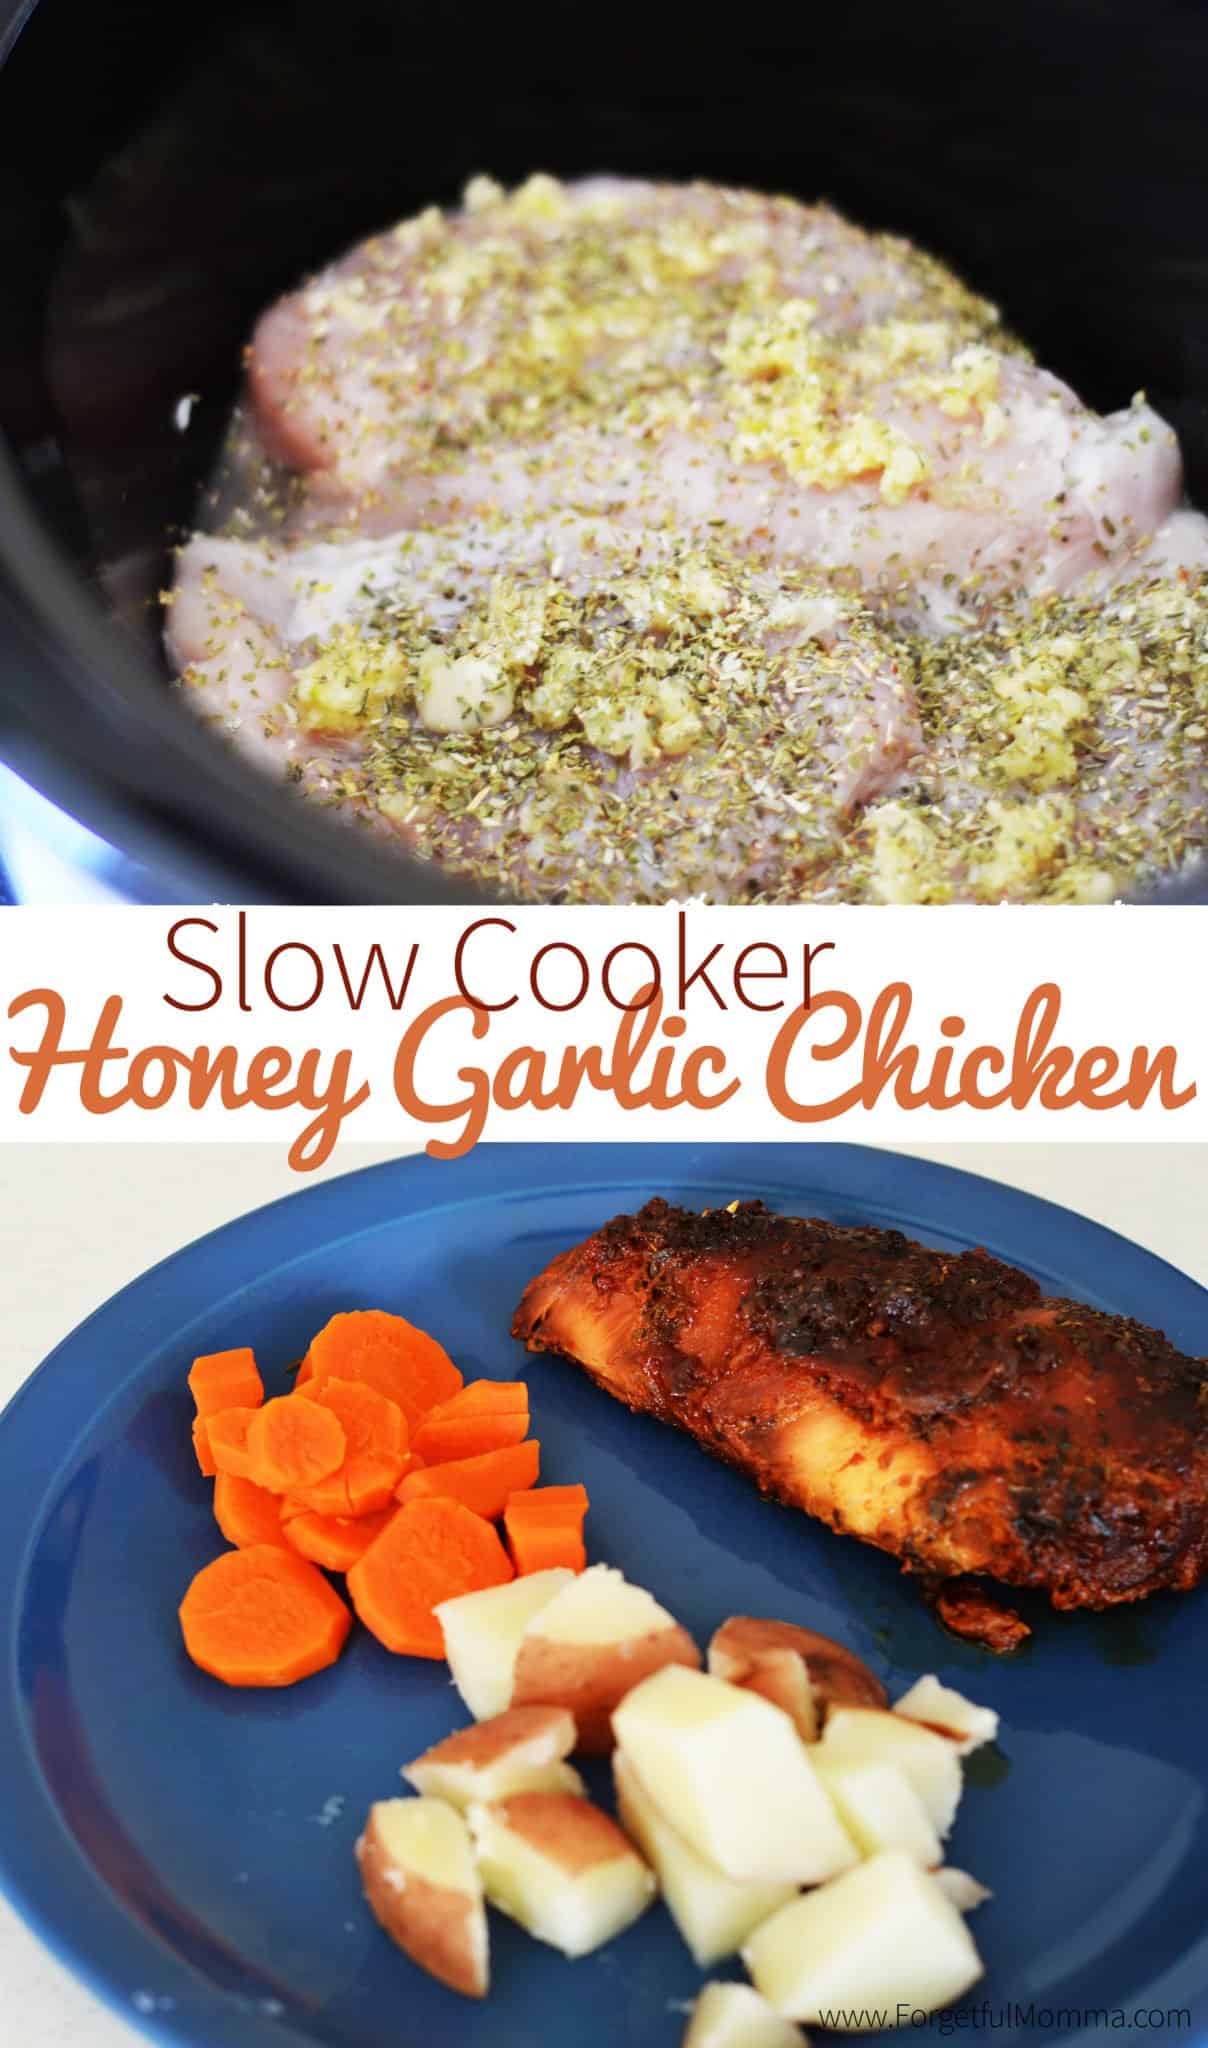 Slow Cooker Honey Garlic Chicken